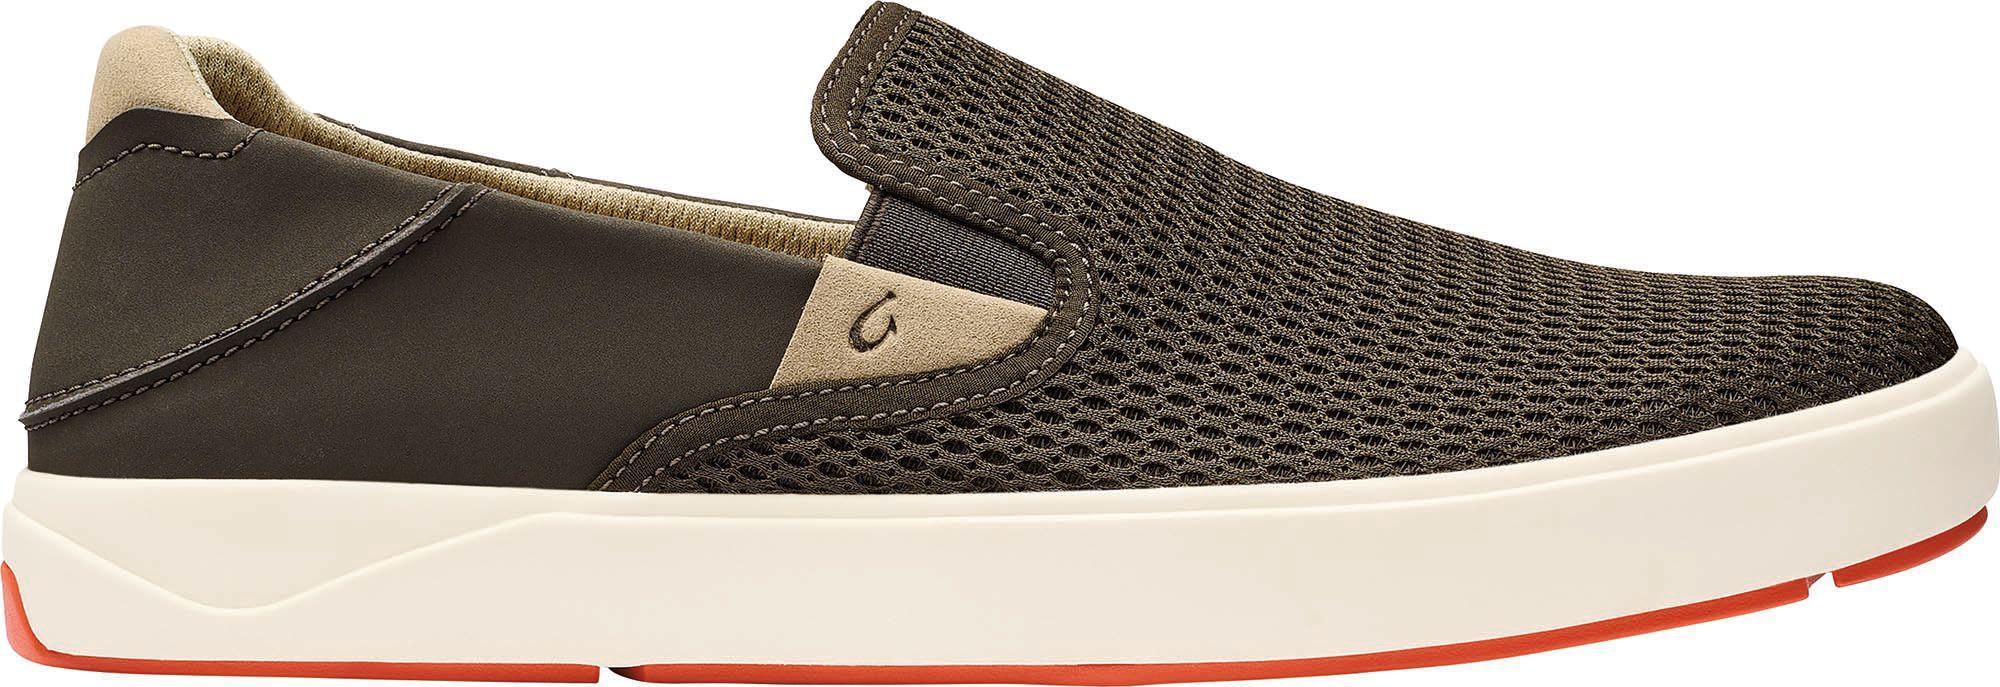 OluKai Laeahi Slip-On Sneaker Product Image